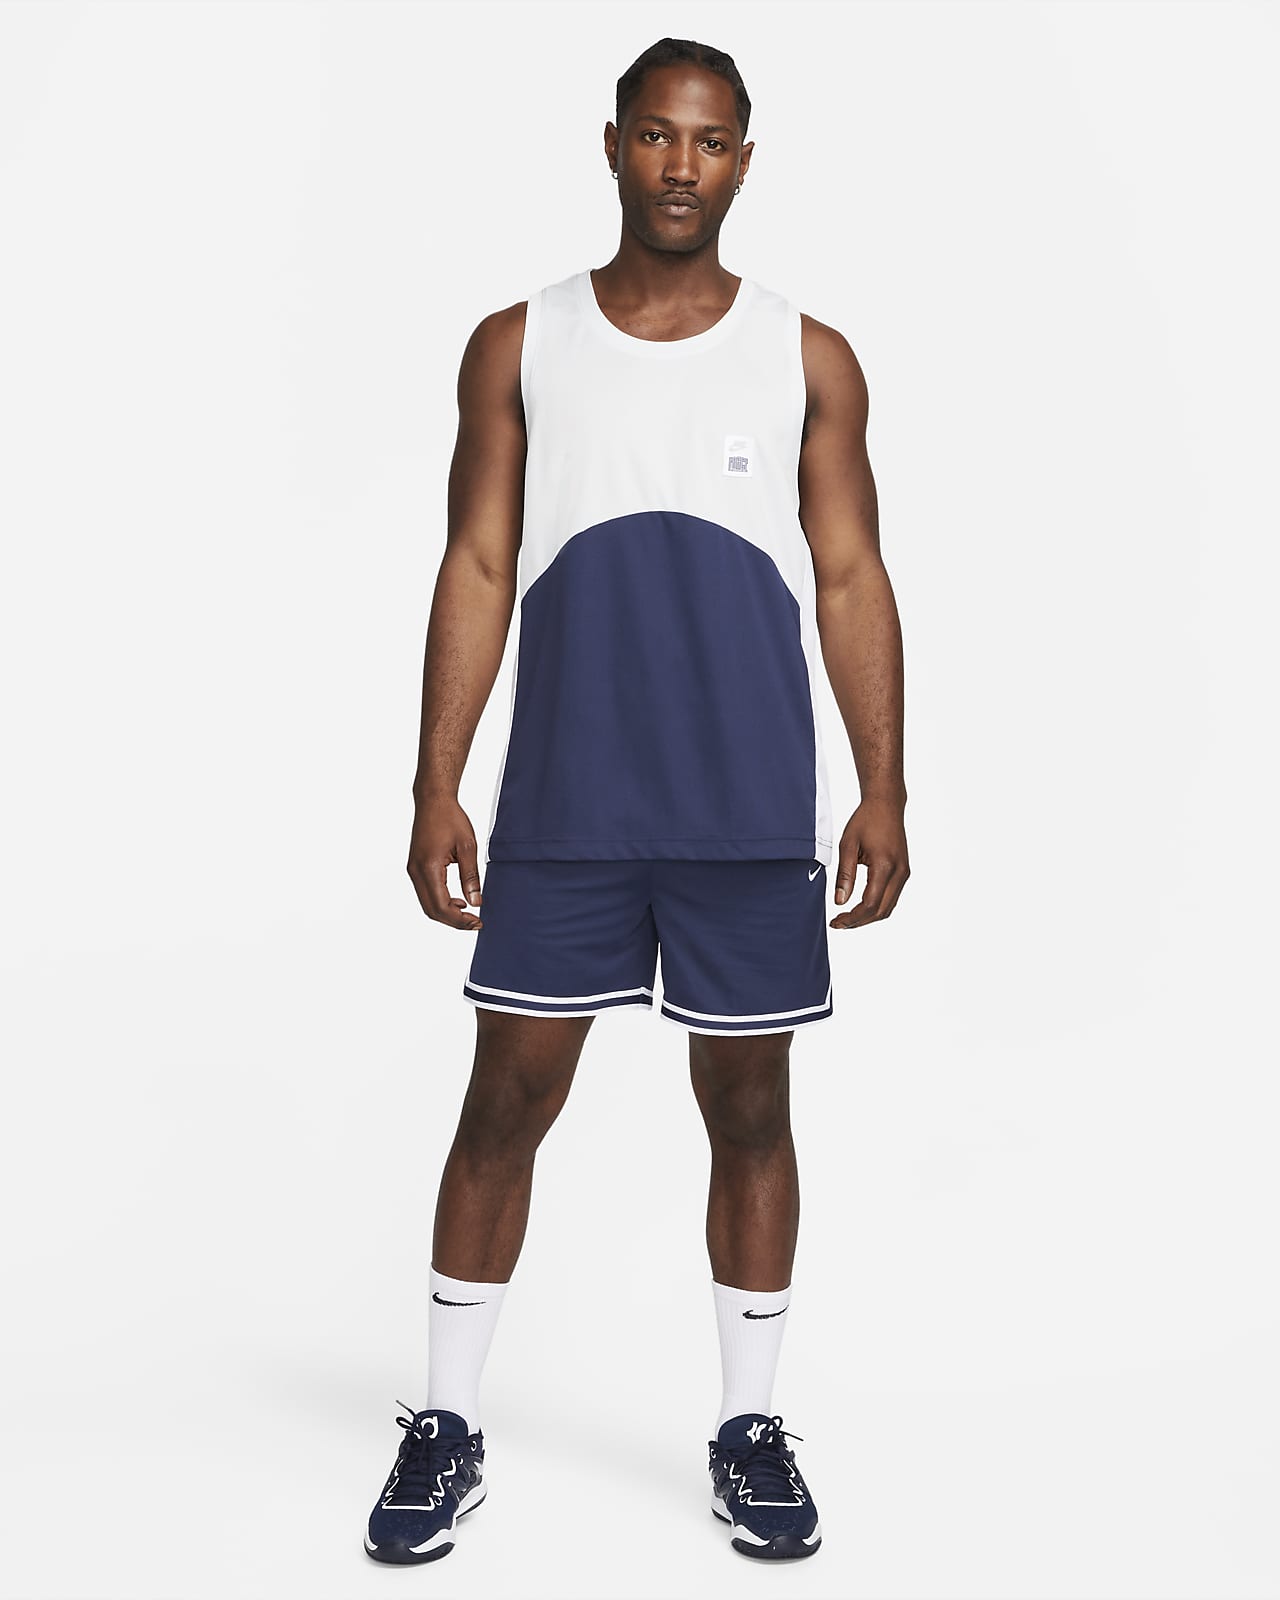 Nike Throwback Loose Fit Retro Basketball Shorts Men Size Medium Blue/Green